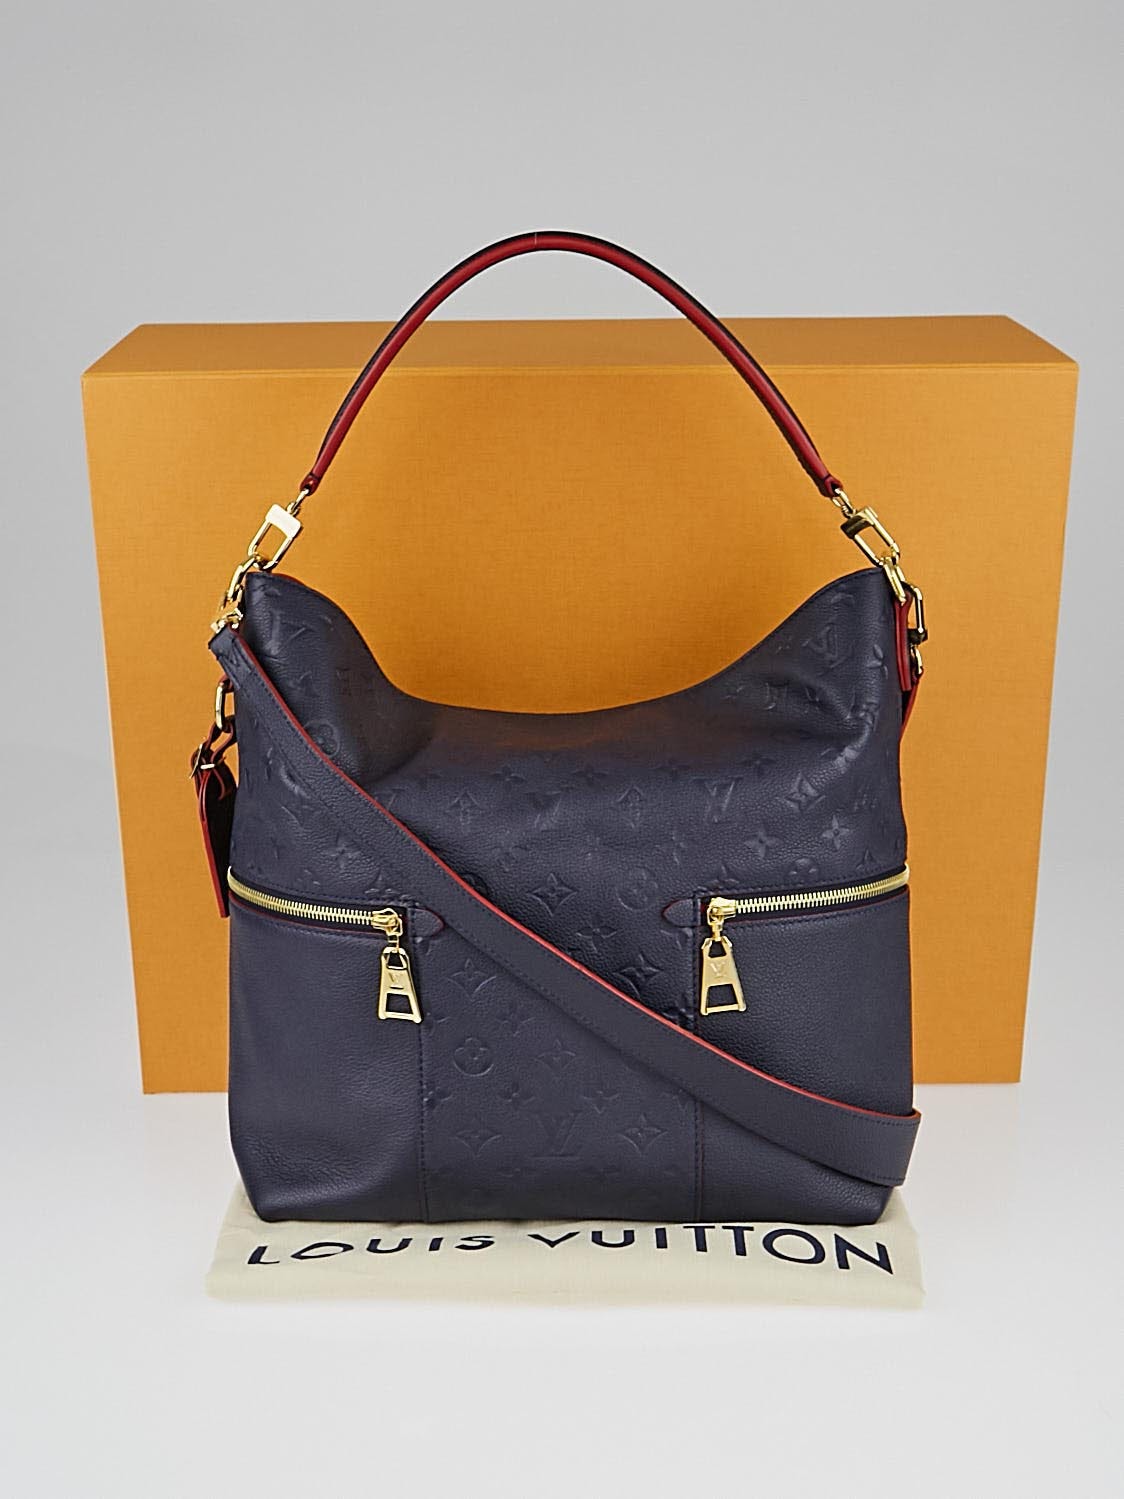 Louis Vuitton Marine/Rouge Monogram Empreinte Leather Melie Bag